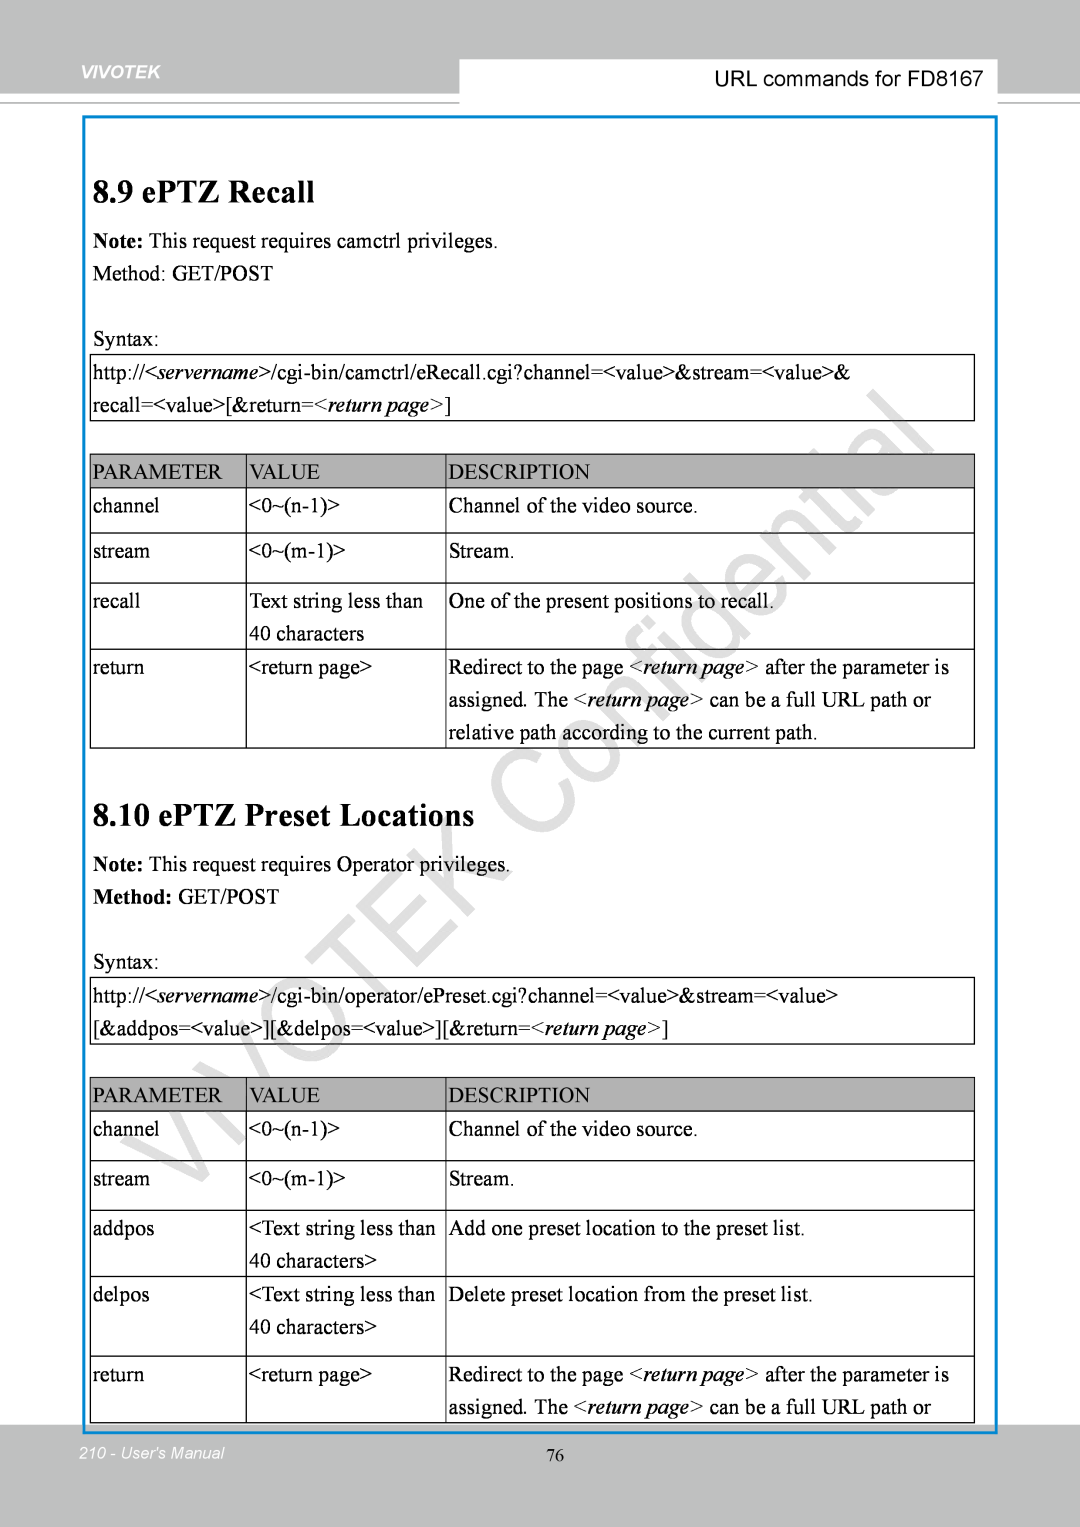 Vivotek FD8167-(T) user manual ePTZ Recall, ePTZ Preset Locations, URL commands for FD8167 